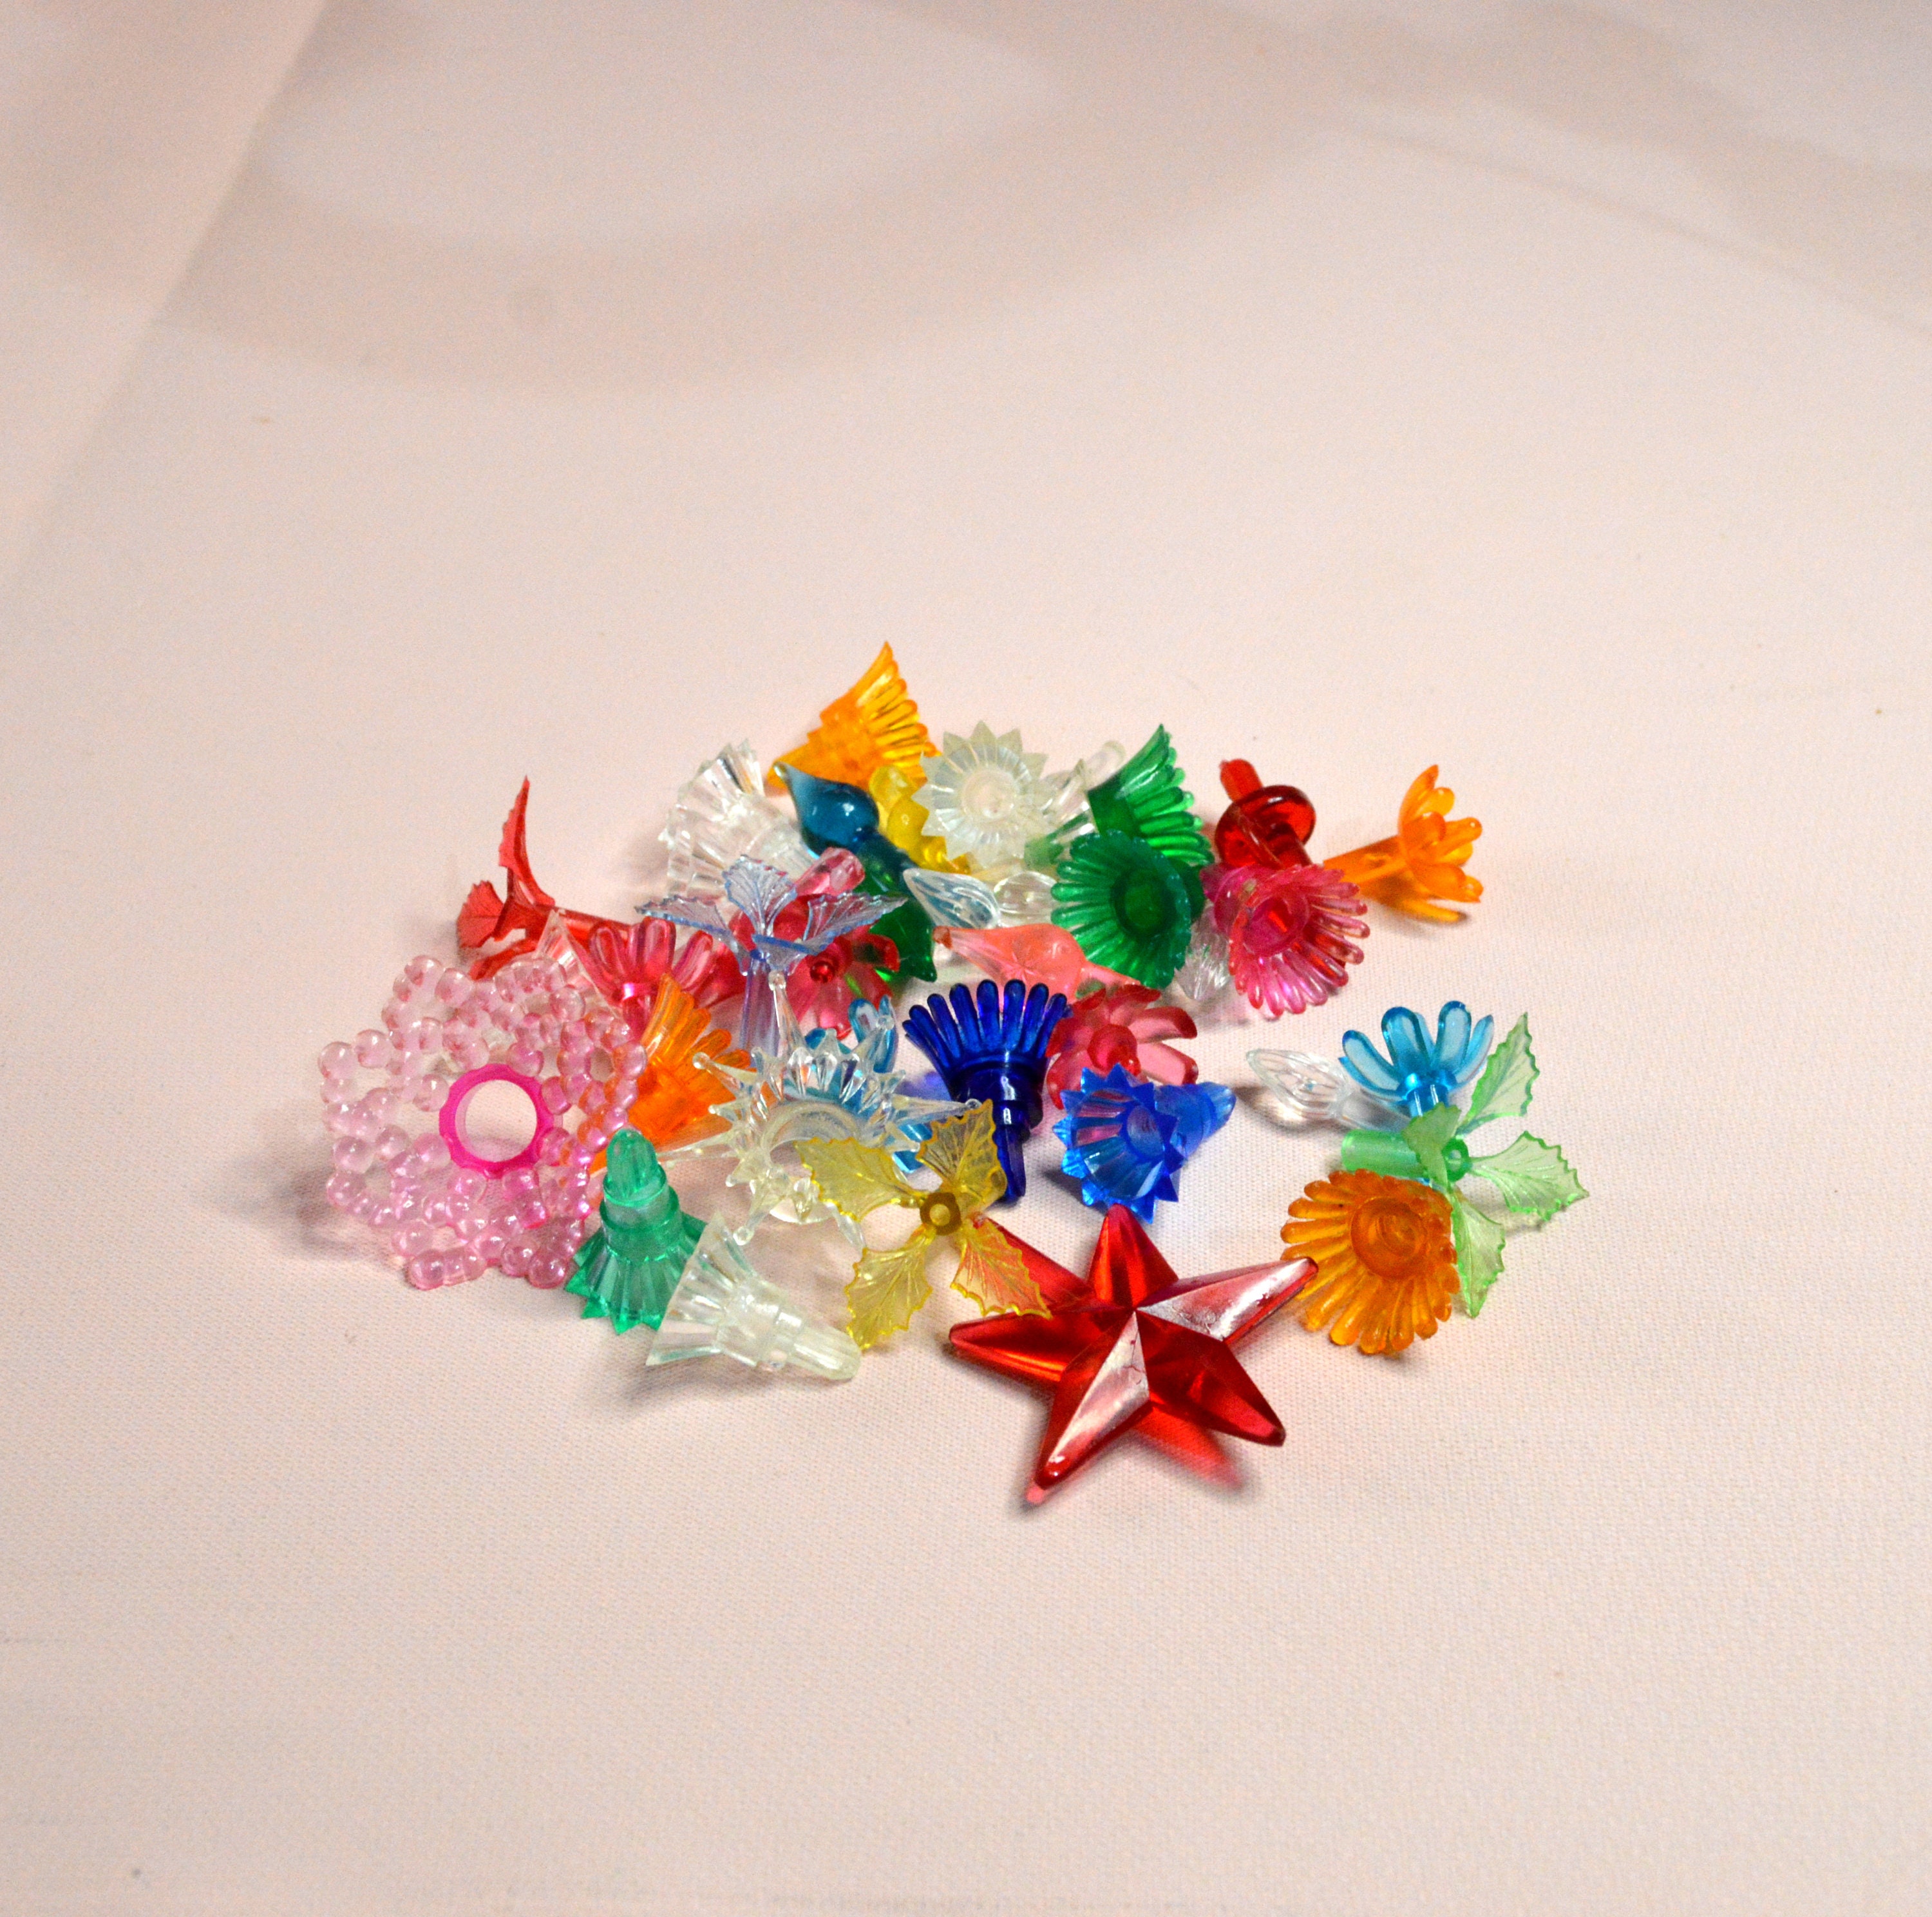 20 Mini Plastic Pegs for Ceramic Christmas Tree or Crafting